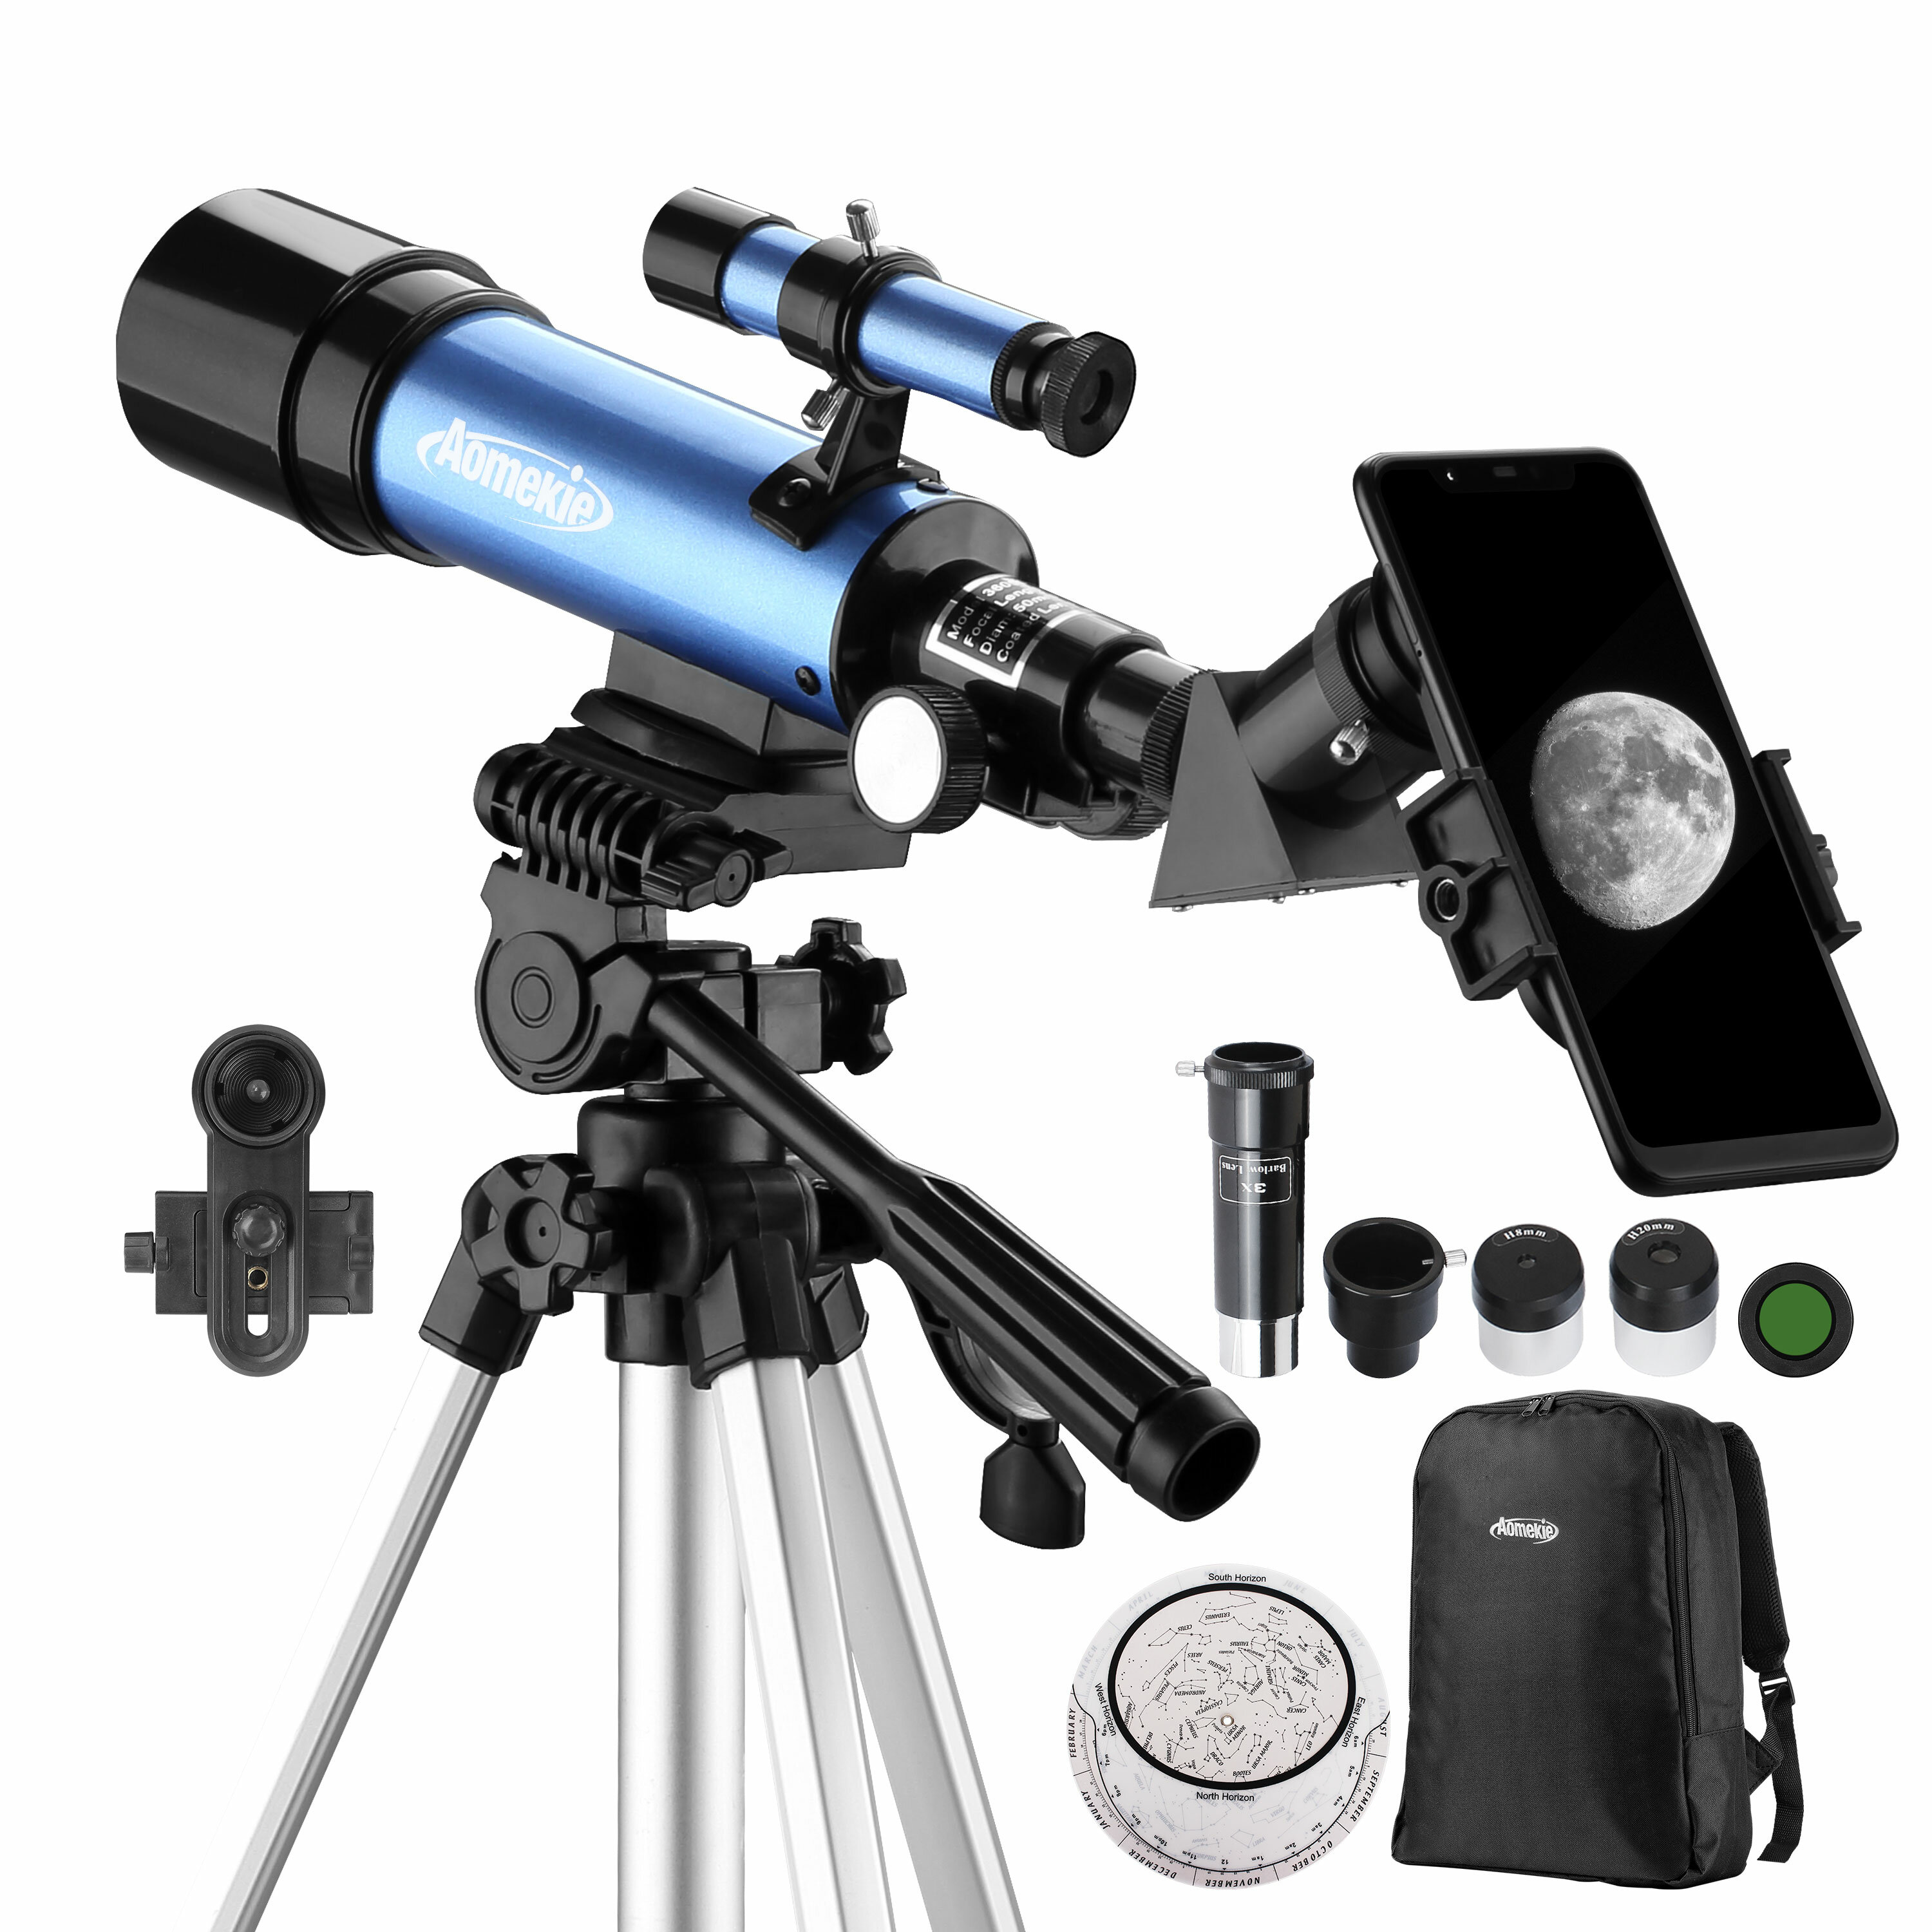 Teleskop astronomi AOMEKIE 18X-135X dengan aperture 50mm, tipe refraktor, dengan adaptor telepon & tripod yang dapat disesuaikan untuk pemula astronomi.